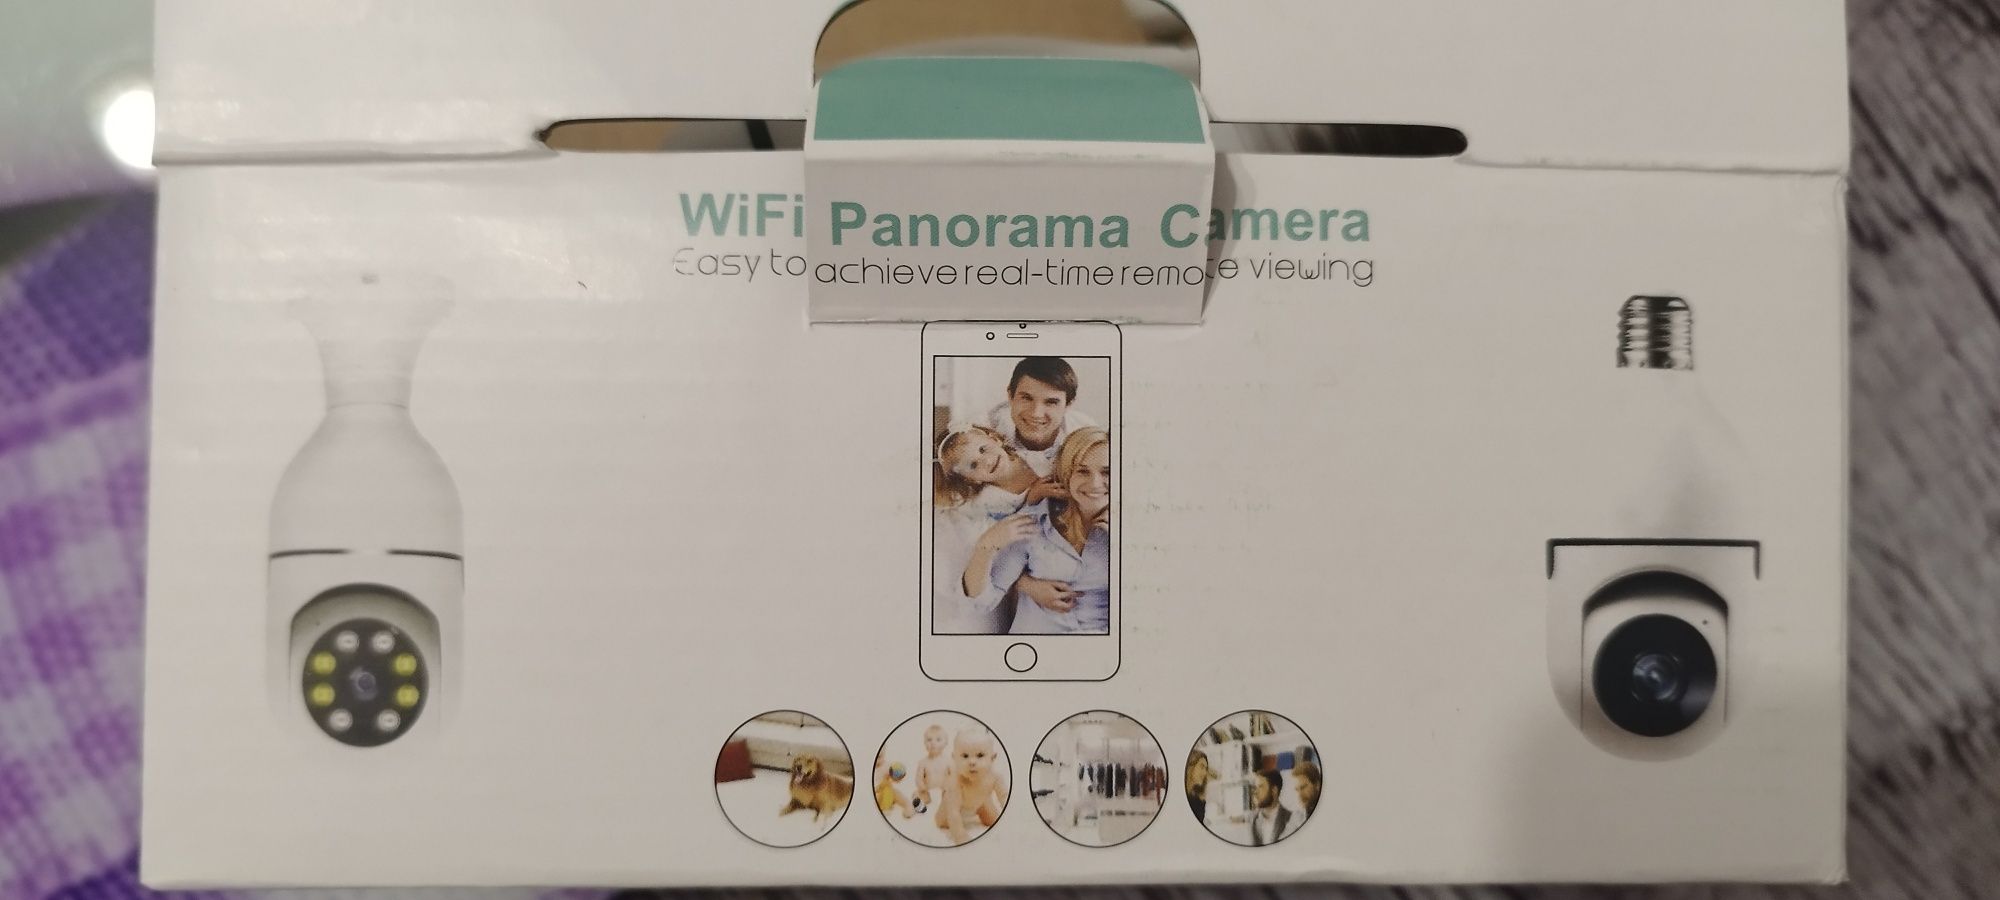 Wifi panorama camera